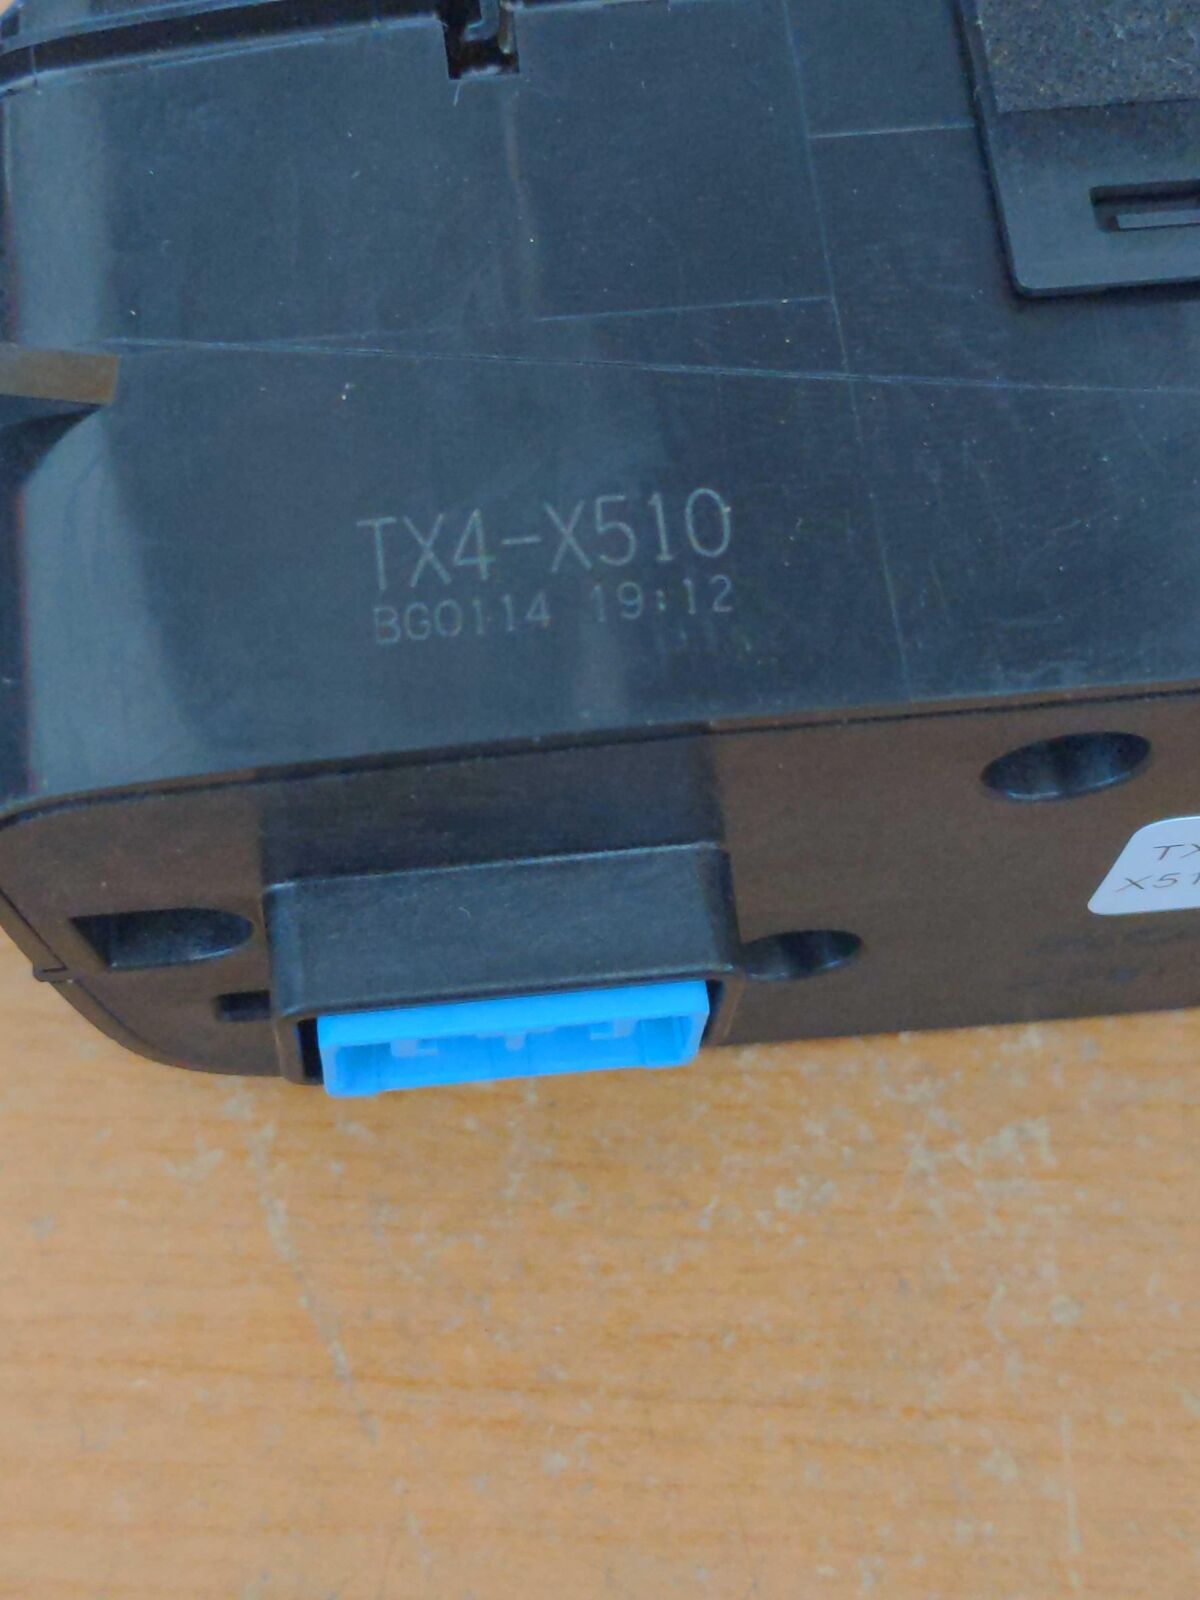 16 17 18 ACURA RDX Radio controller Tx4-x510